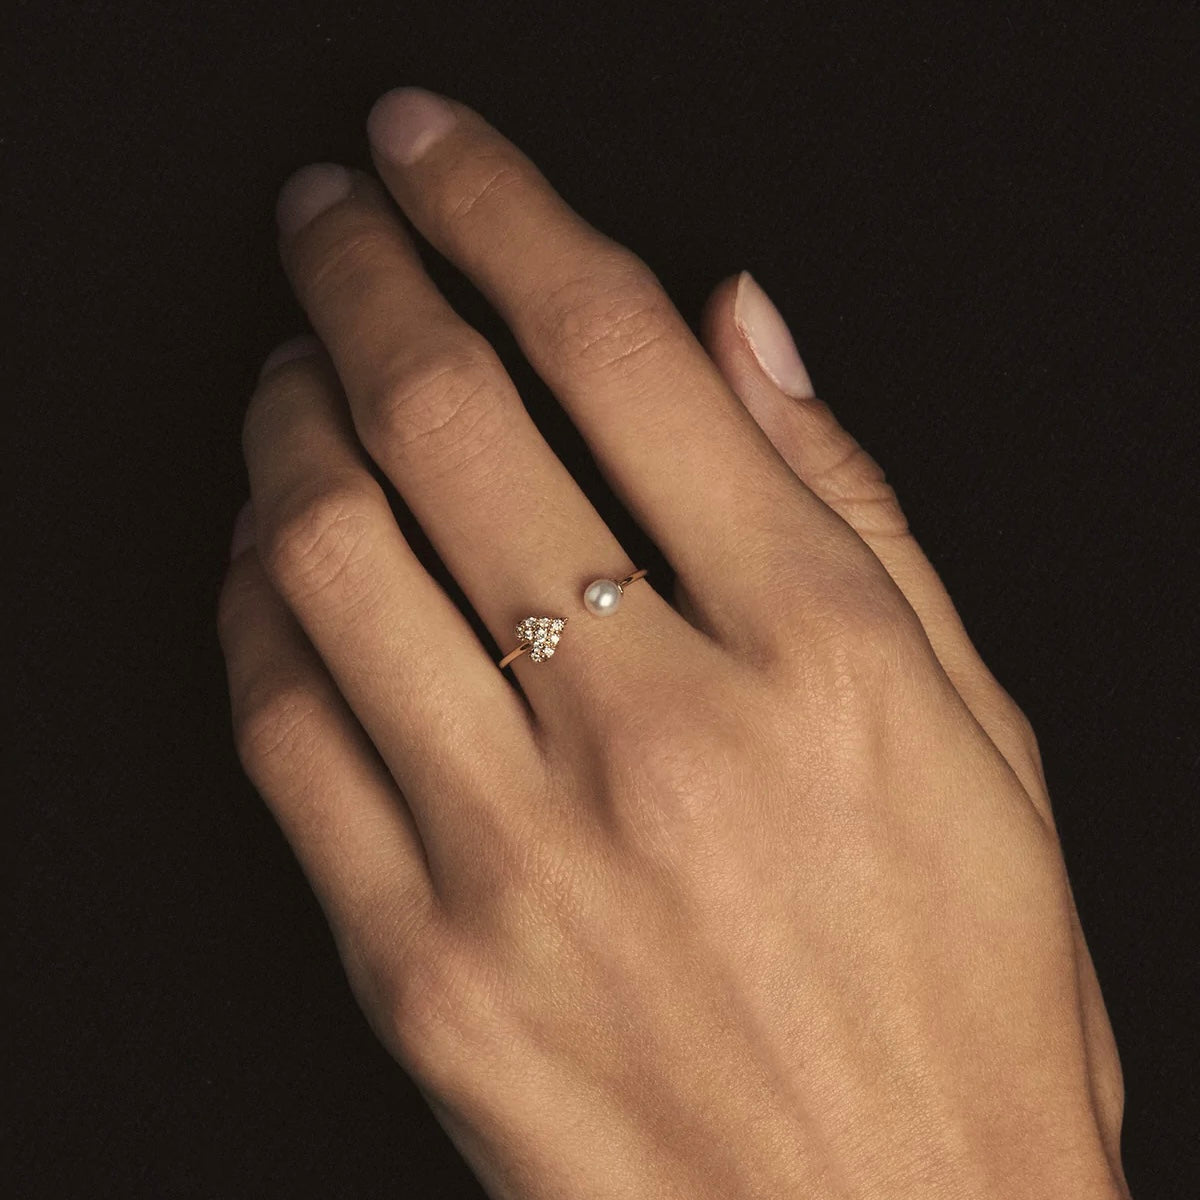 Pearl & Diamond Heart Ring